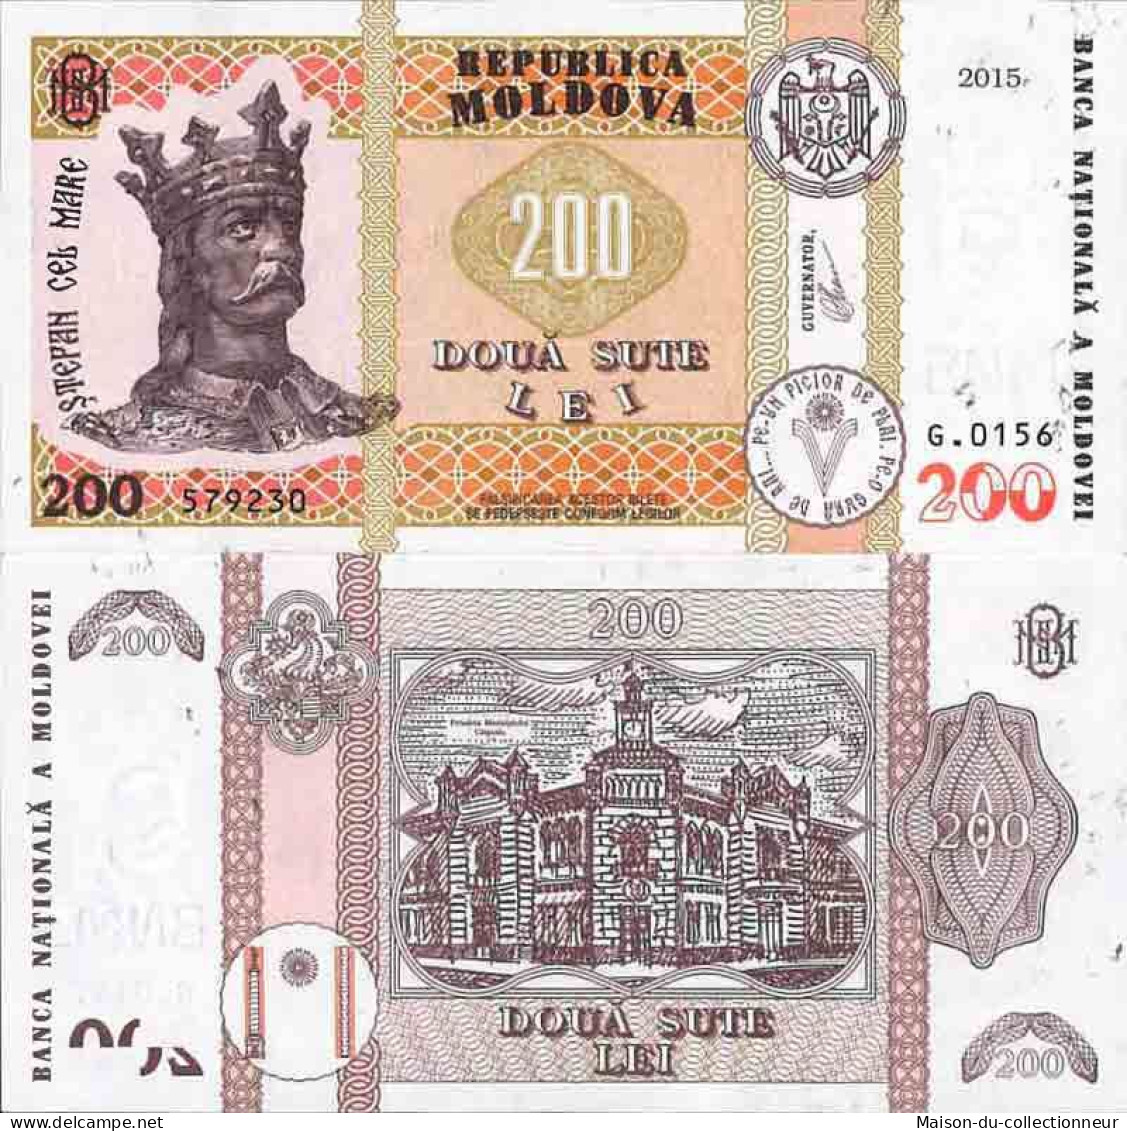 Billet De Banque Collection Moldavie - PK N° 26 - 200 LEI - Moldavia